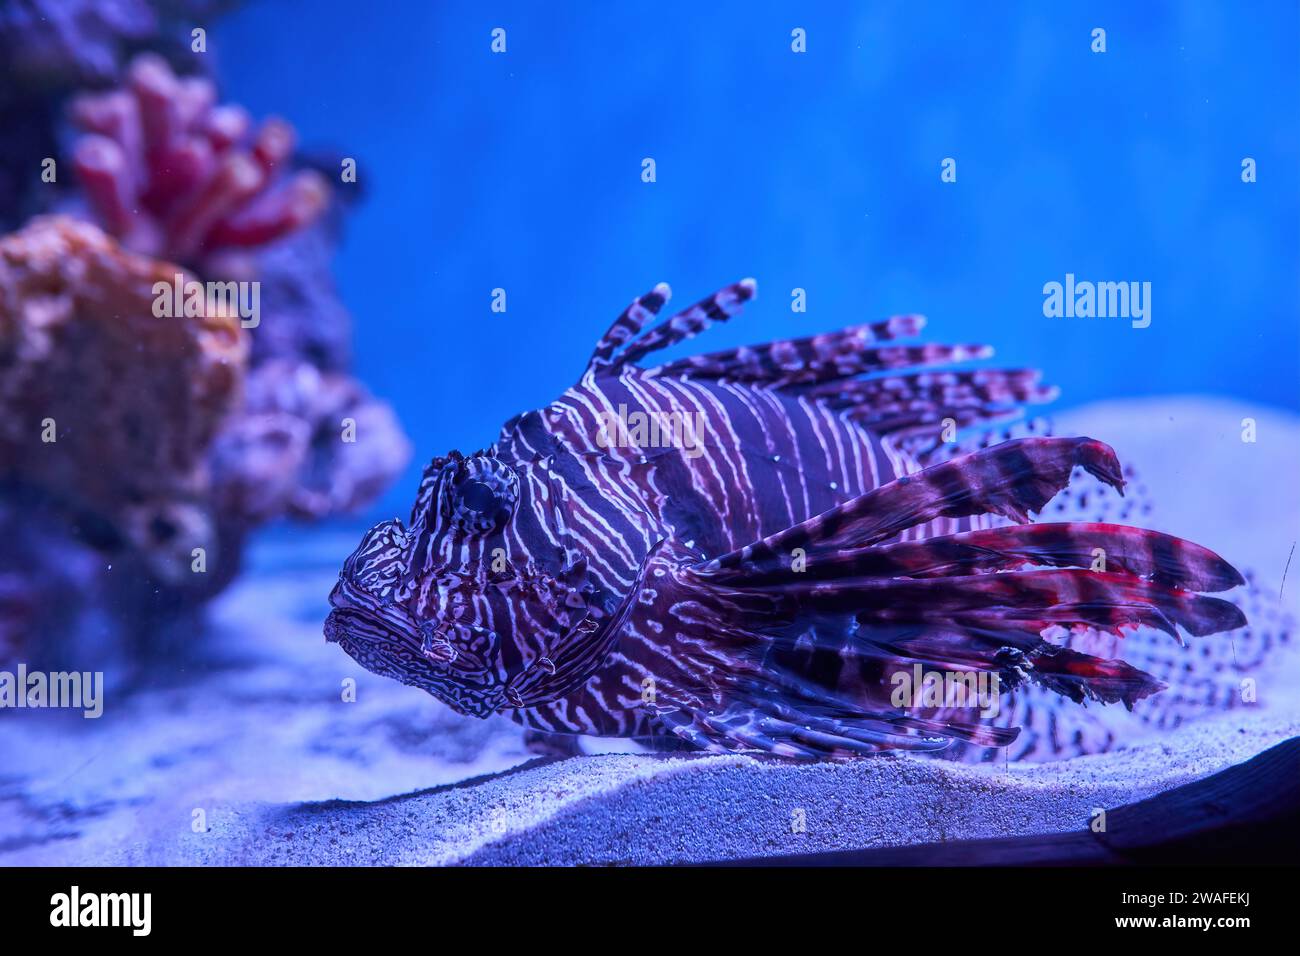 Colorful Fishes in the Aquarium Stock Photo